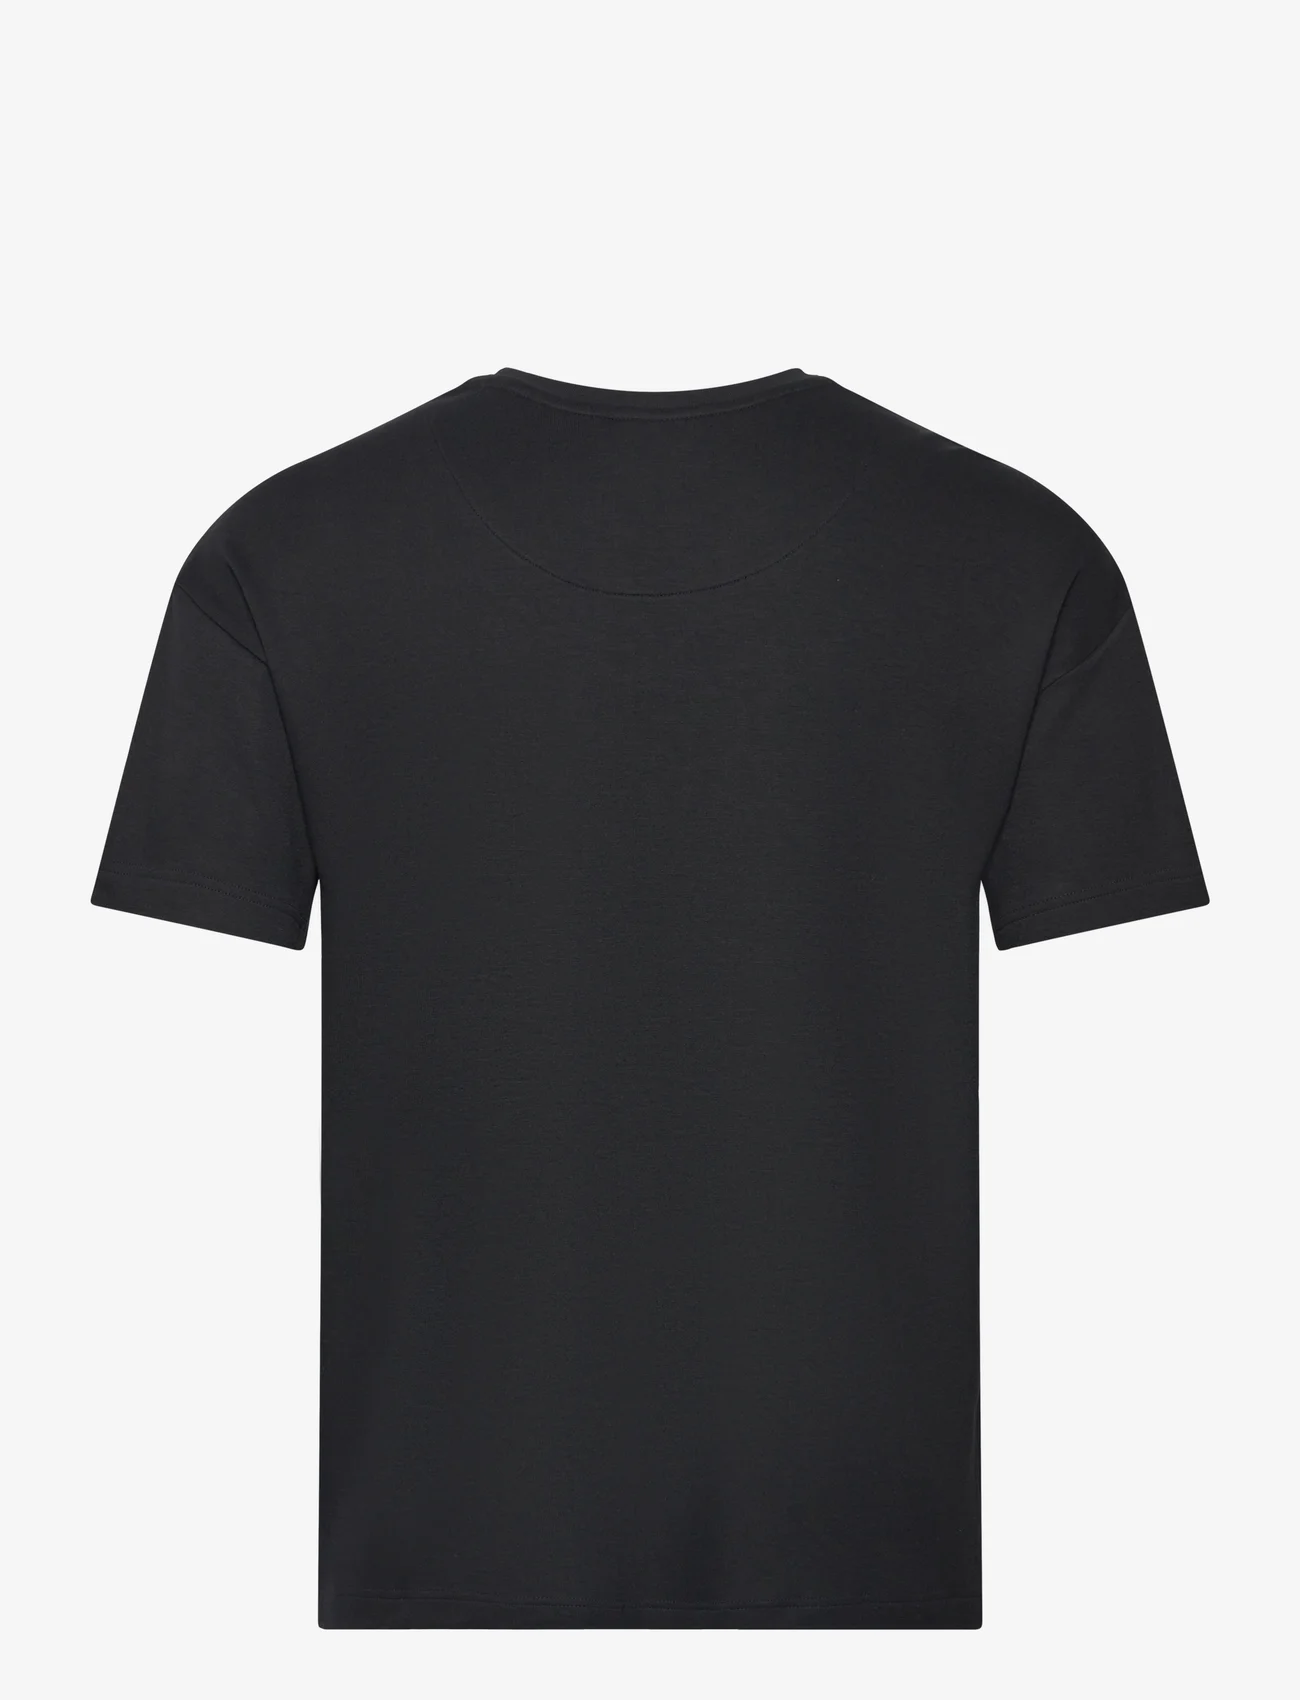 HUGO - Camo T-Shirt - kortærmede t-shirts - black - 1